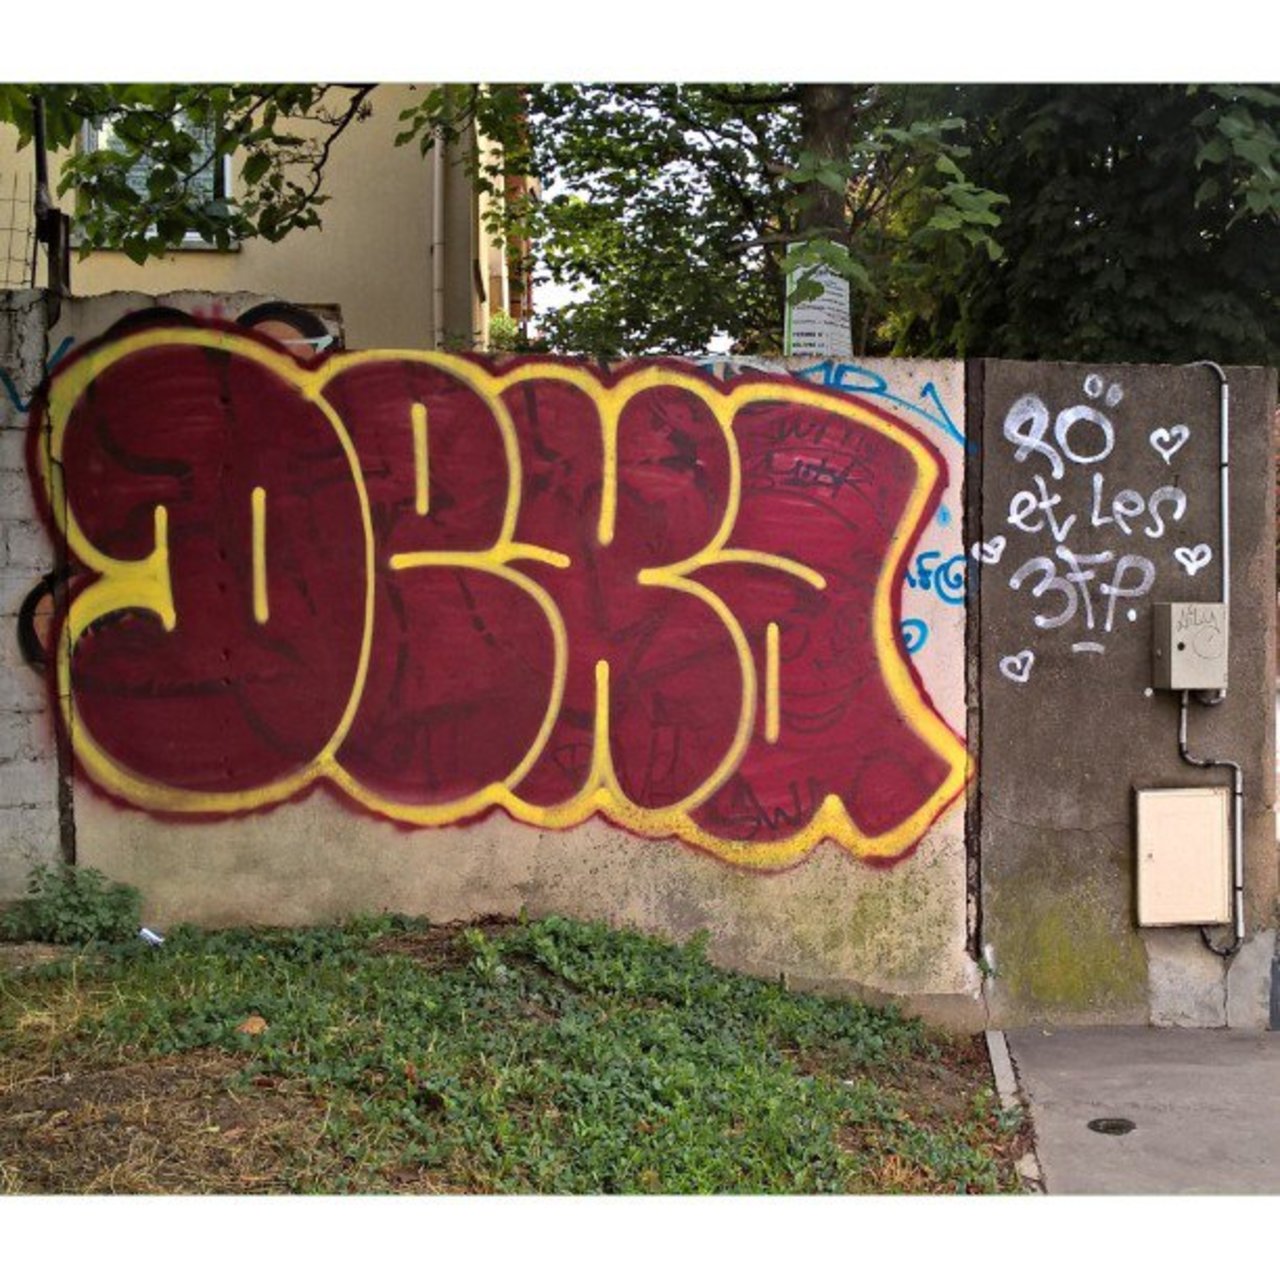 #Paris #graffiti photo by @maxdimontemarciano http://ift.tt/1kyqvv5 #StreetArt https://t.co/gIukz8cZck